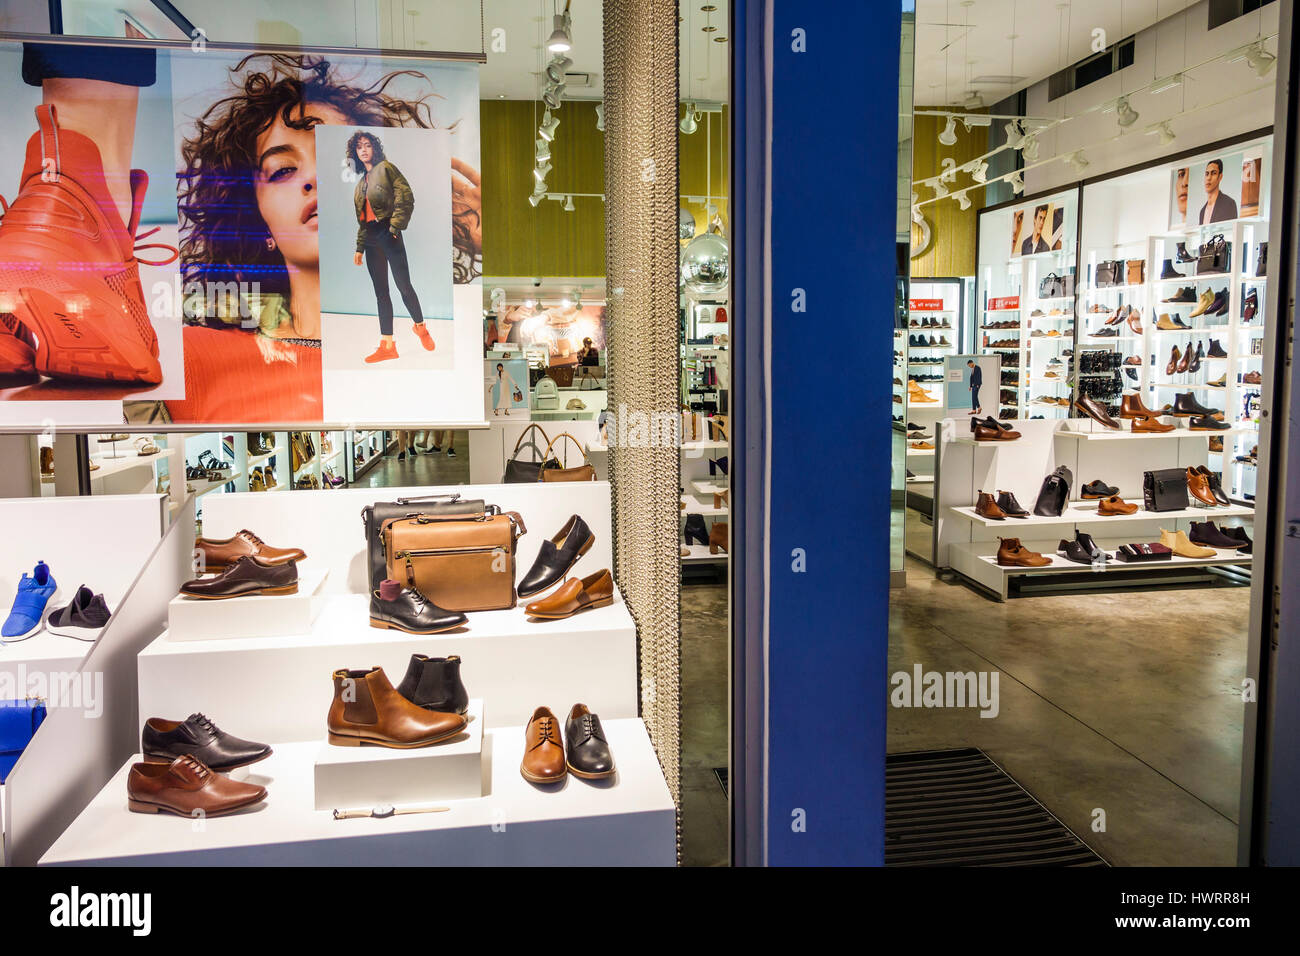 Miami Beach Florida,Collins Avenue,Aldo Shoes footwear,shopping shoe store men's shoes window display entrance Stock Photo Alamy